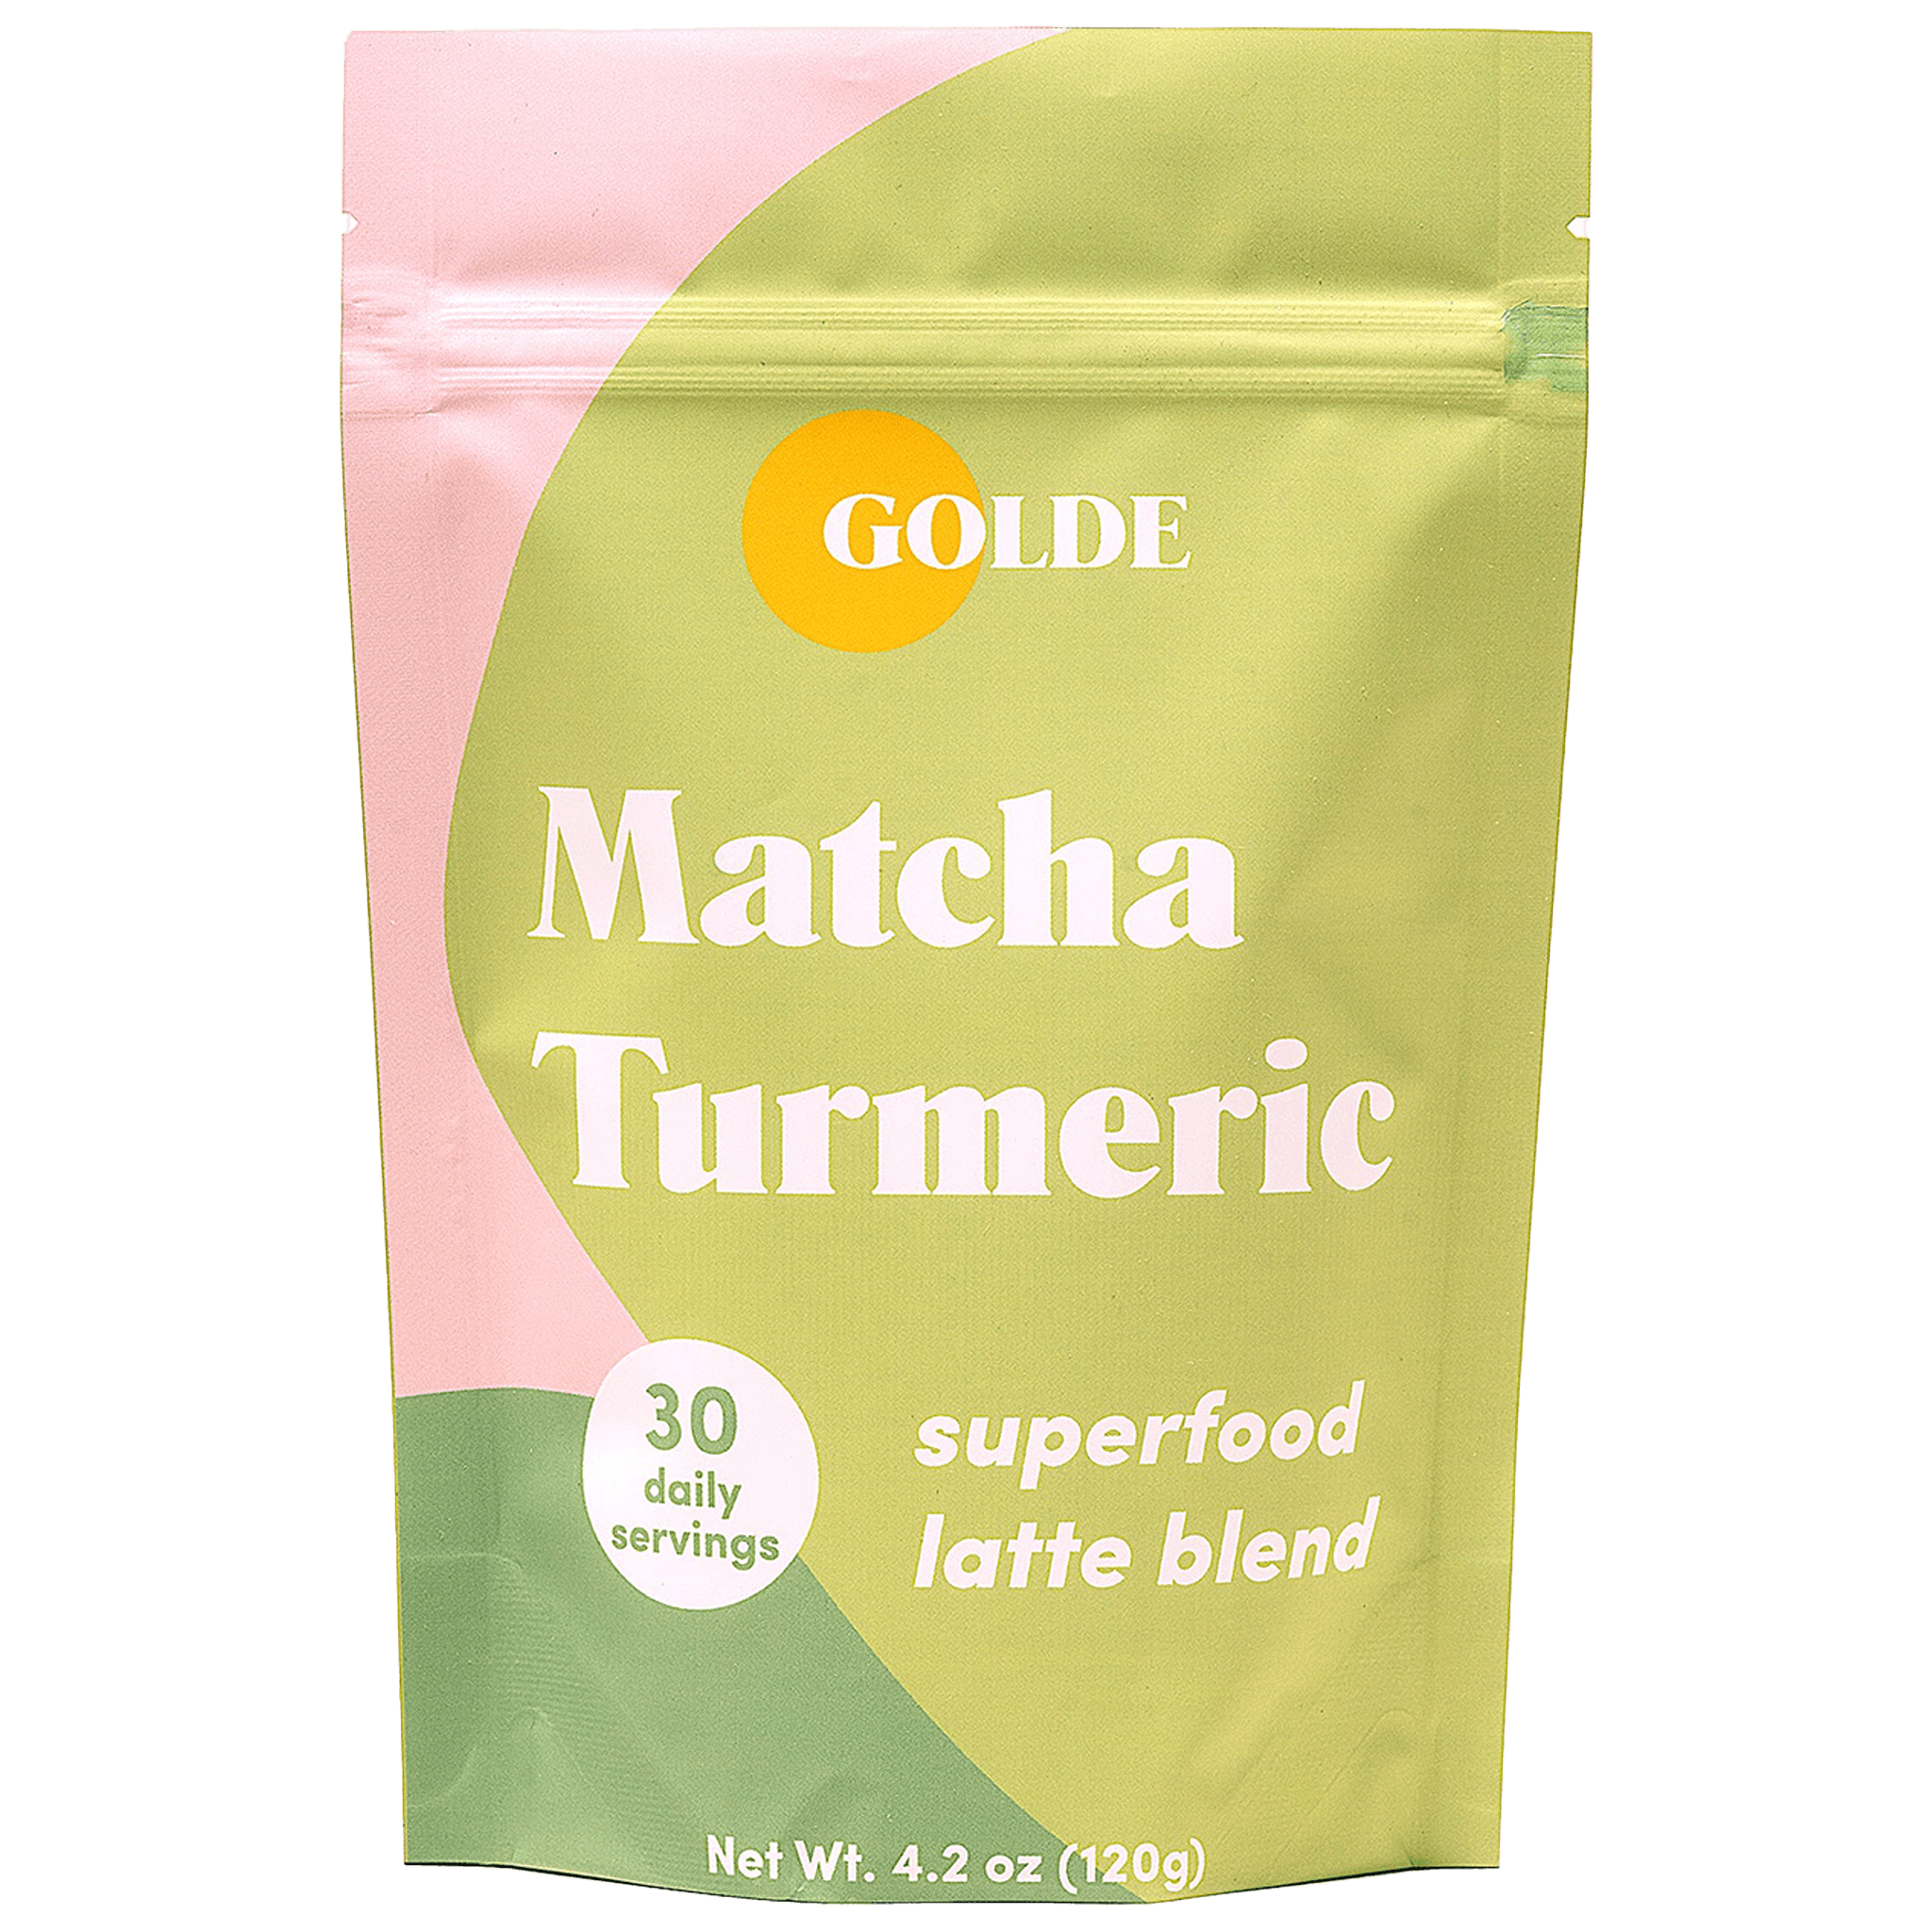 Matcha Turmeric Latte Blend - Golde - Consumerhaus